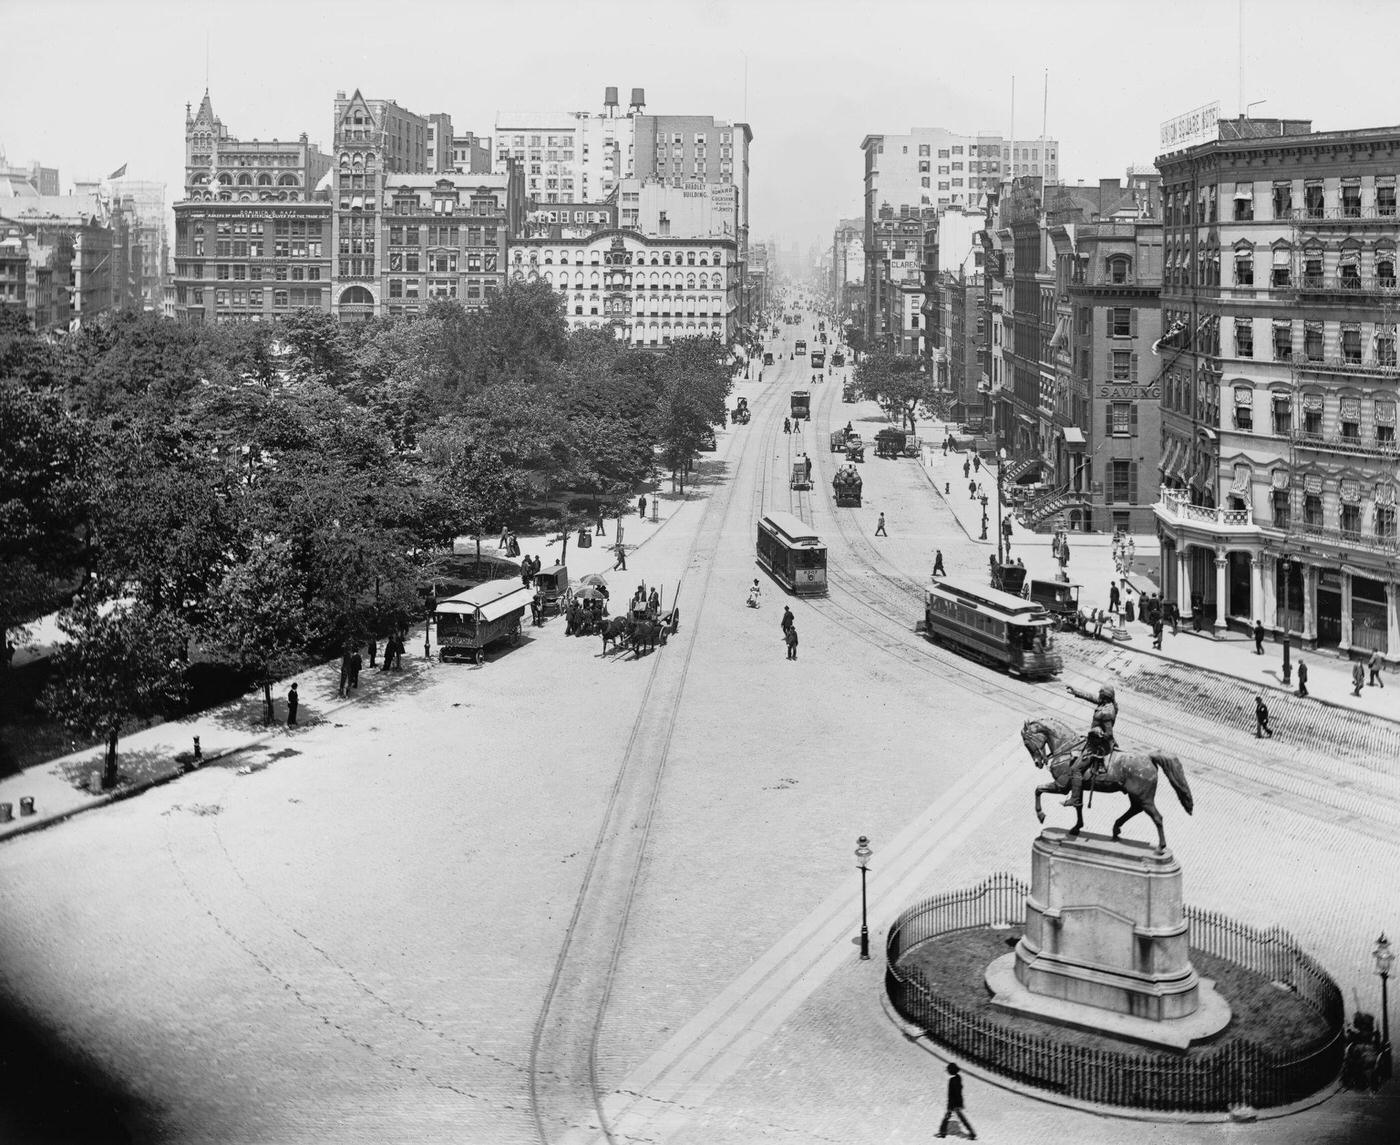 Union Square, New York City, 1900